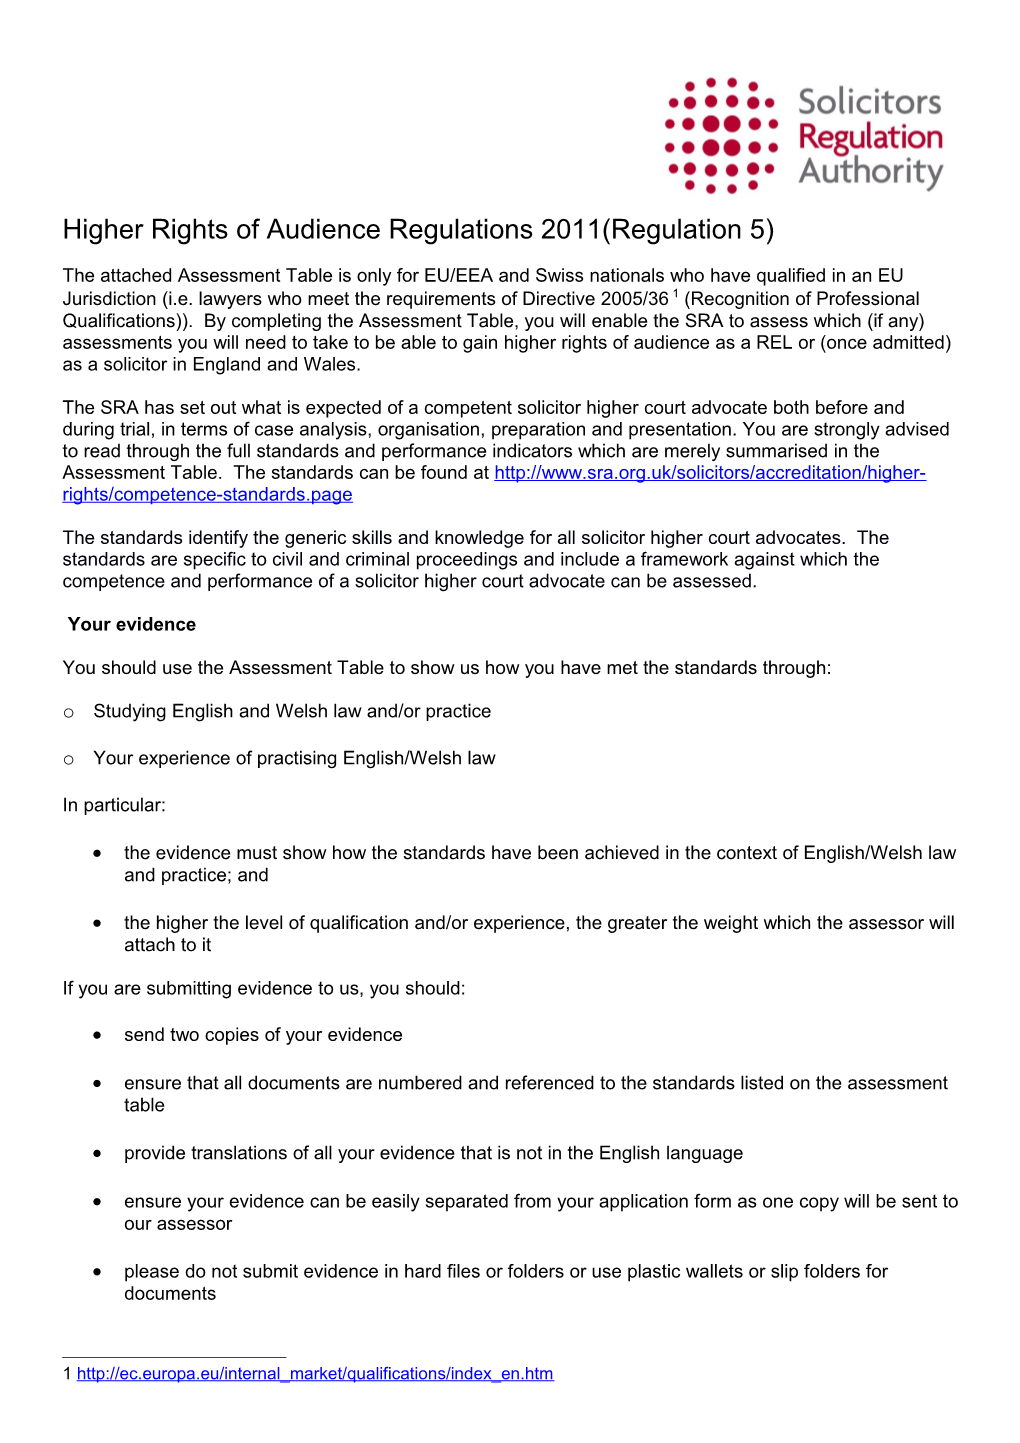 Higher Rights of Audience Regulations 2011 (Regulation 5)